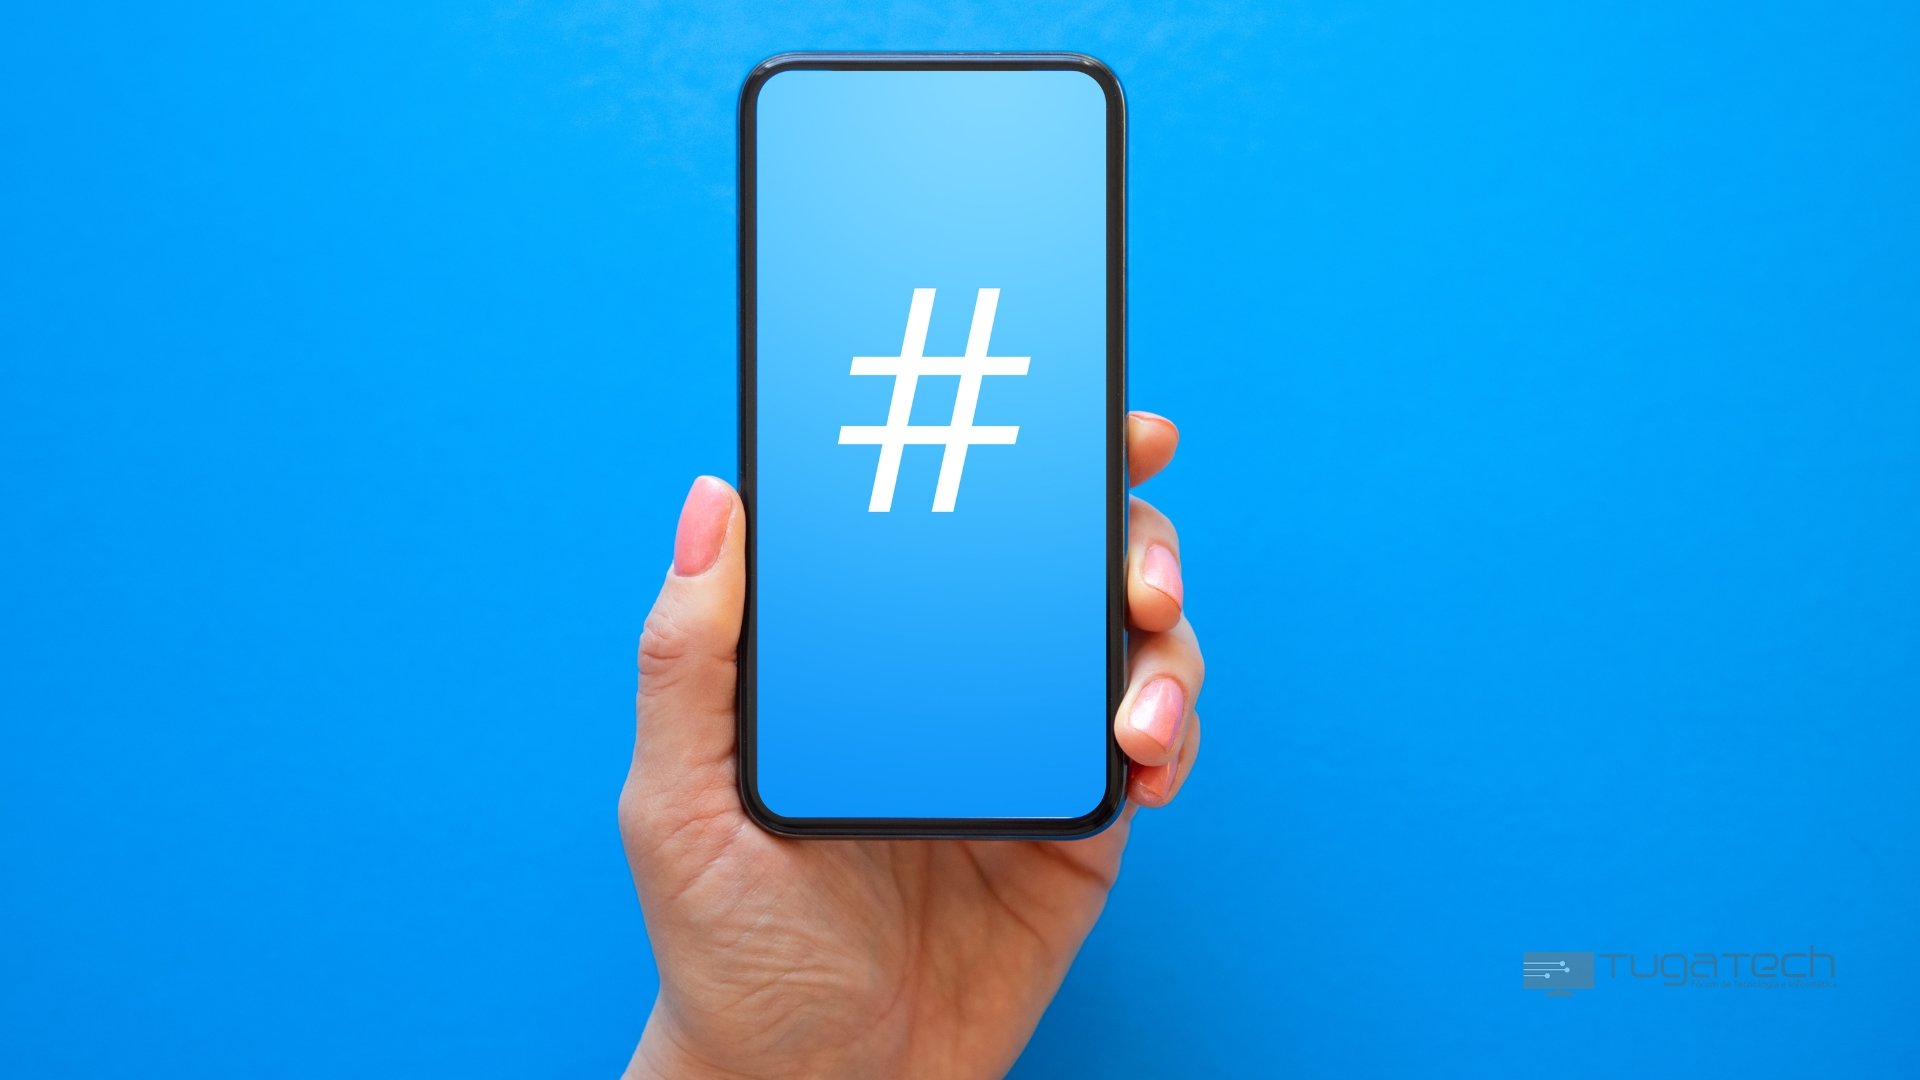 App do Twitter com hashtag ativa